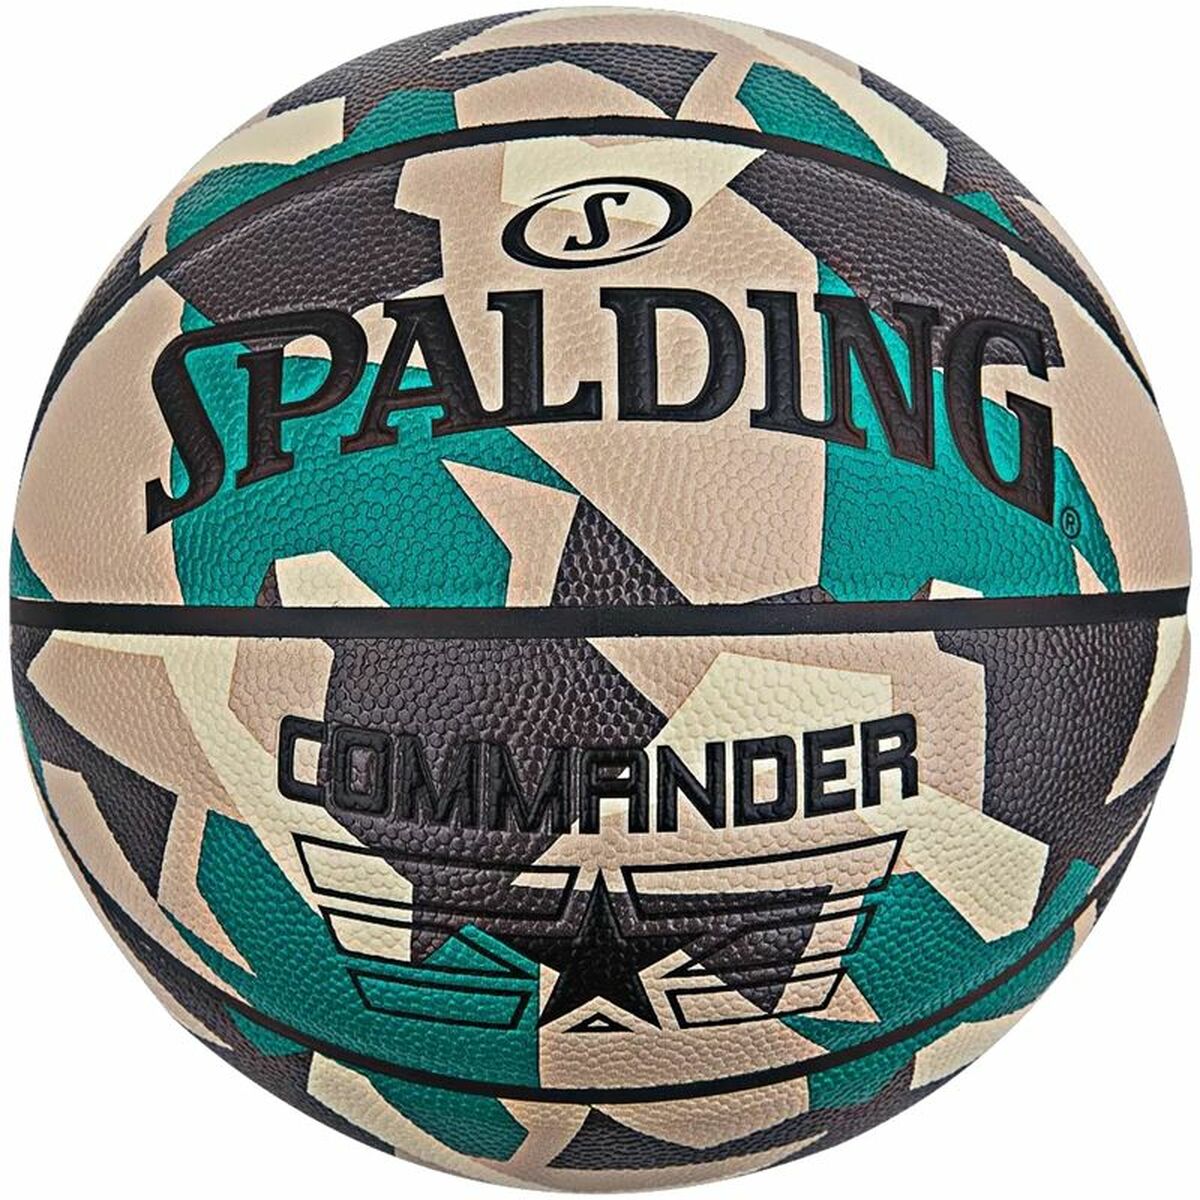 Piłka do Koszykówki Spalding Commander 5